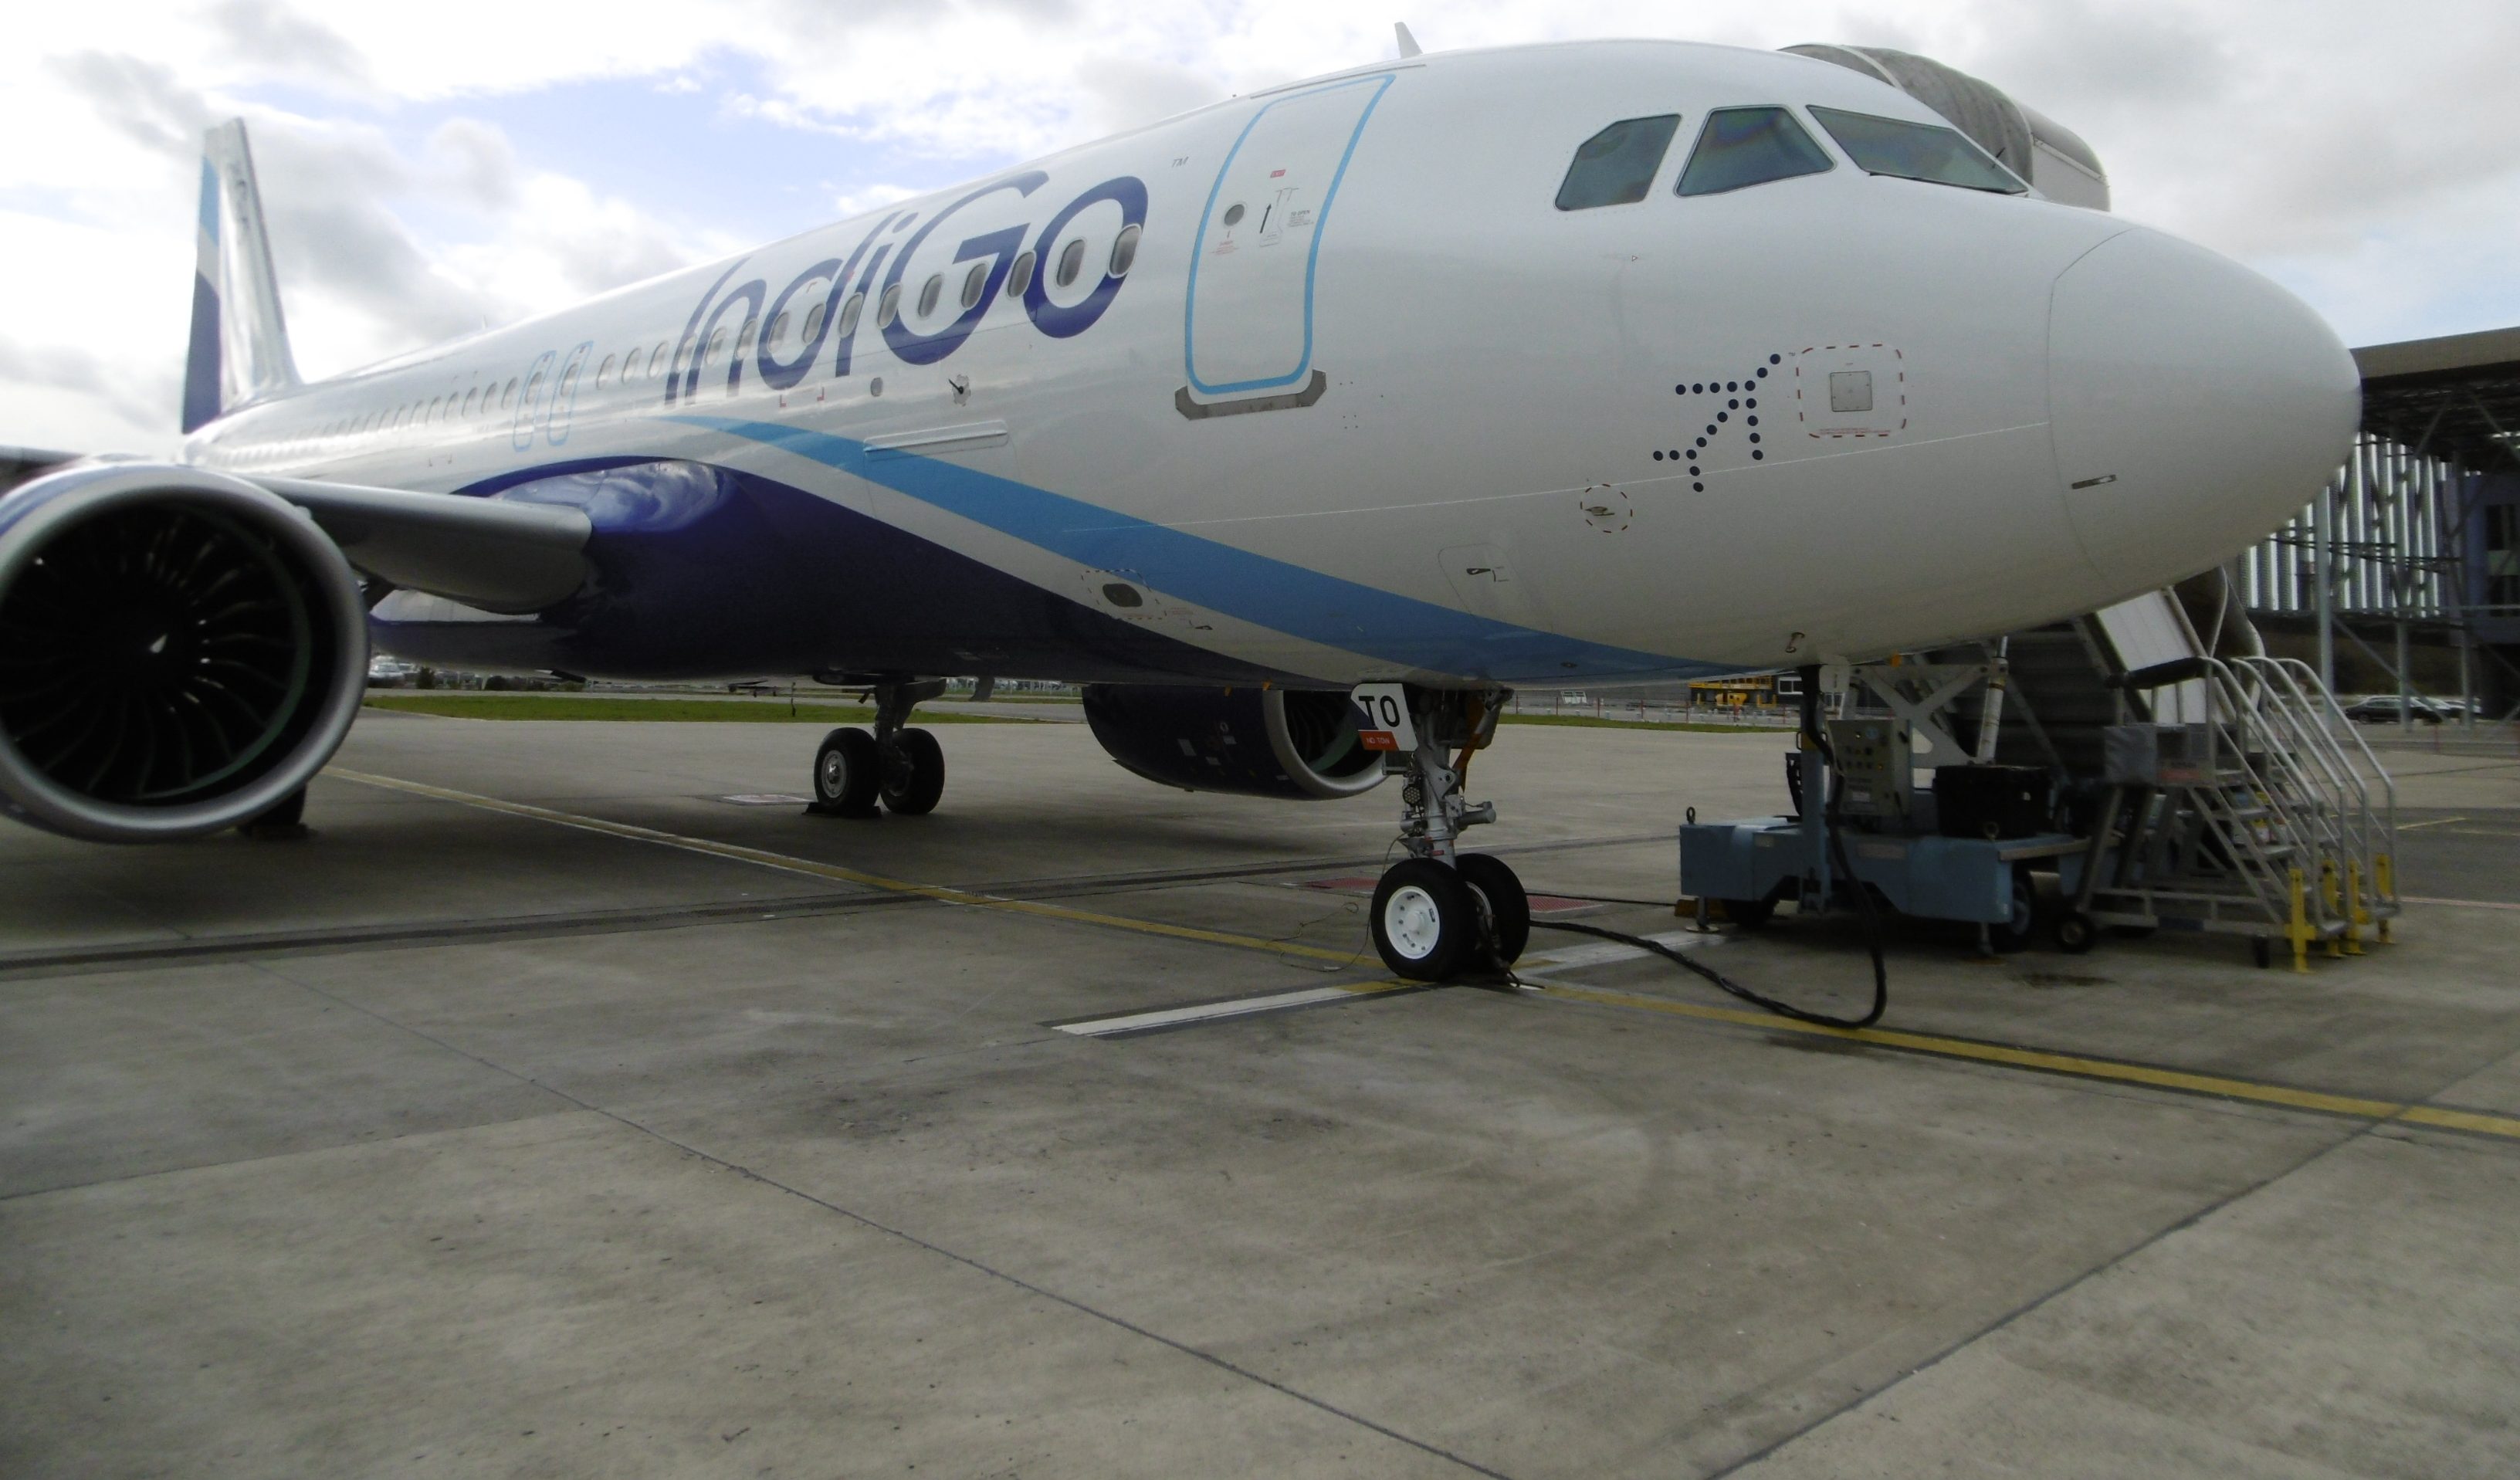 Indian regulator grounds 11 A320neos following Indigo engine failure